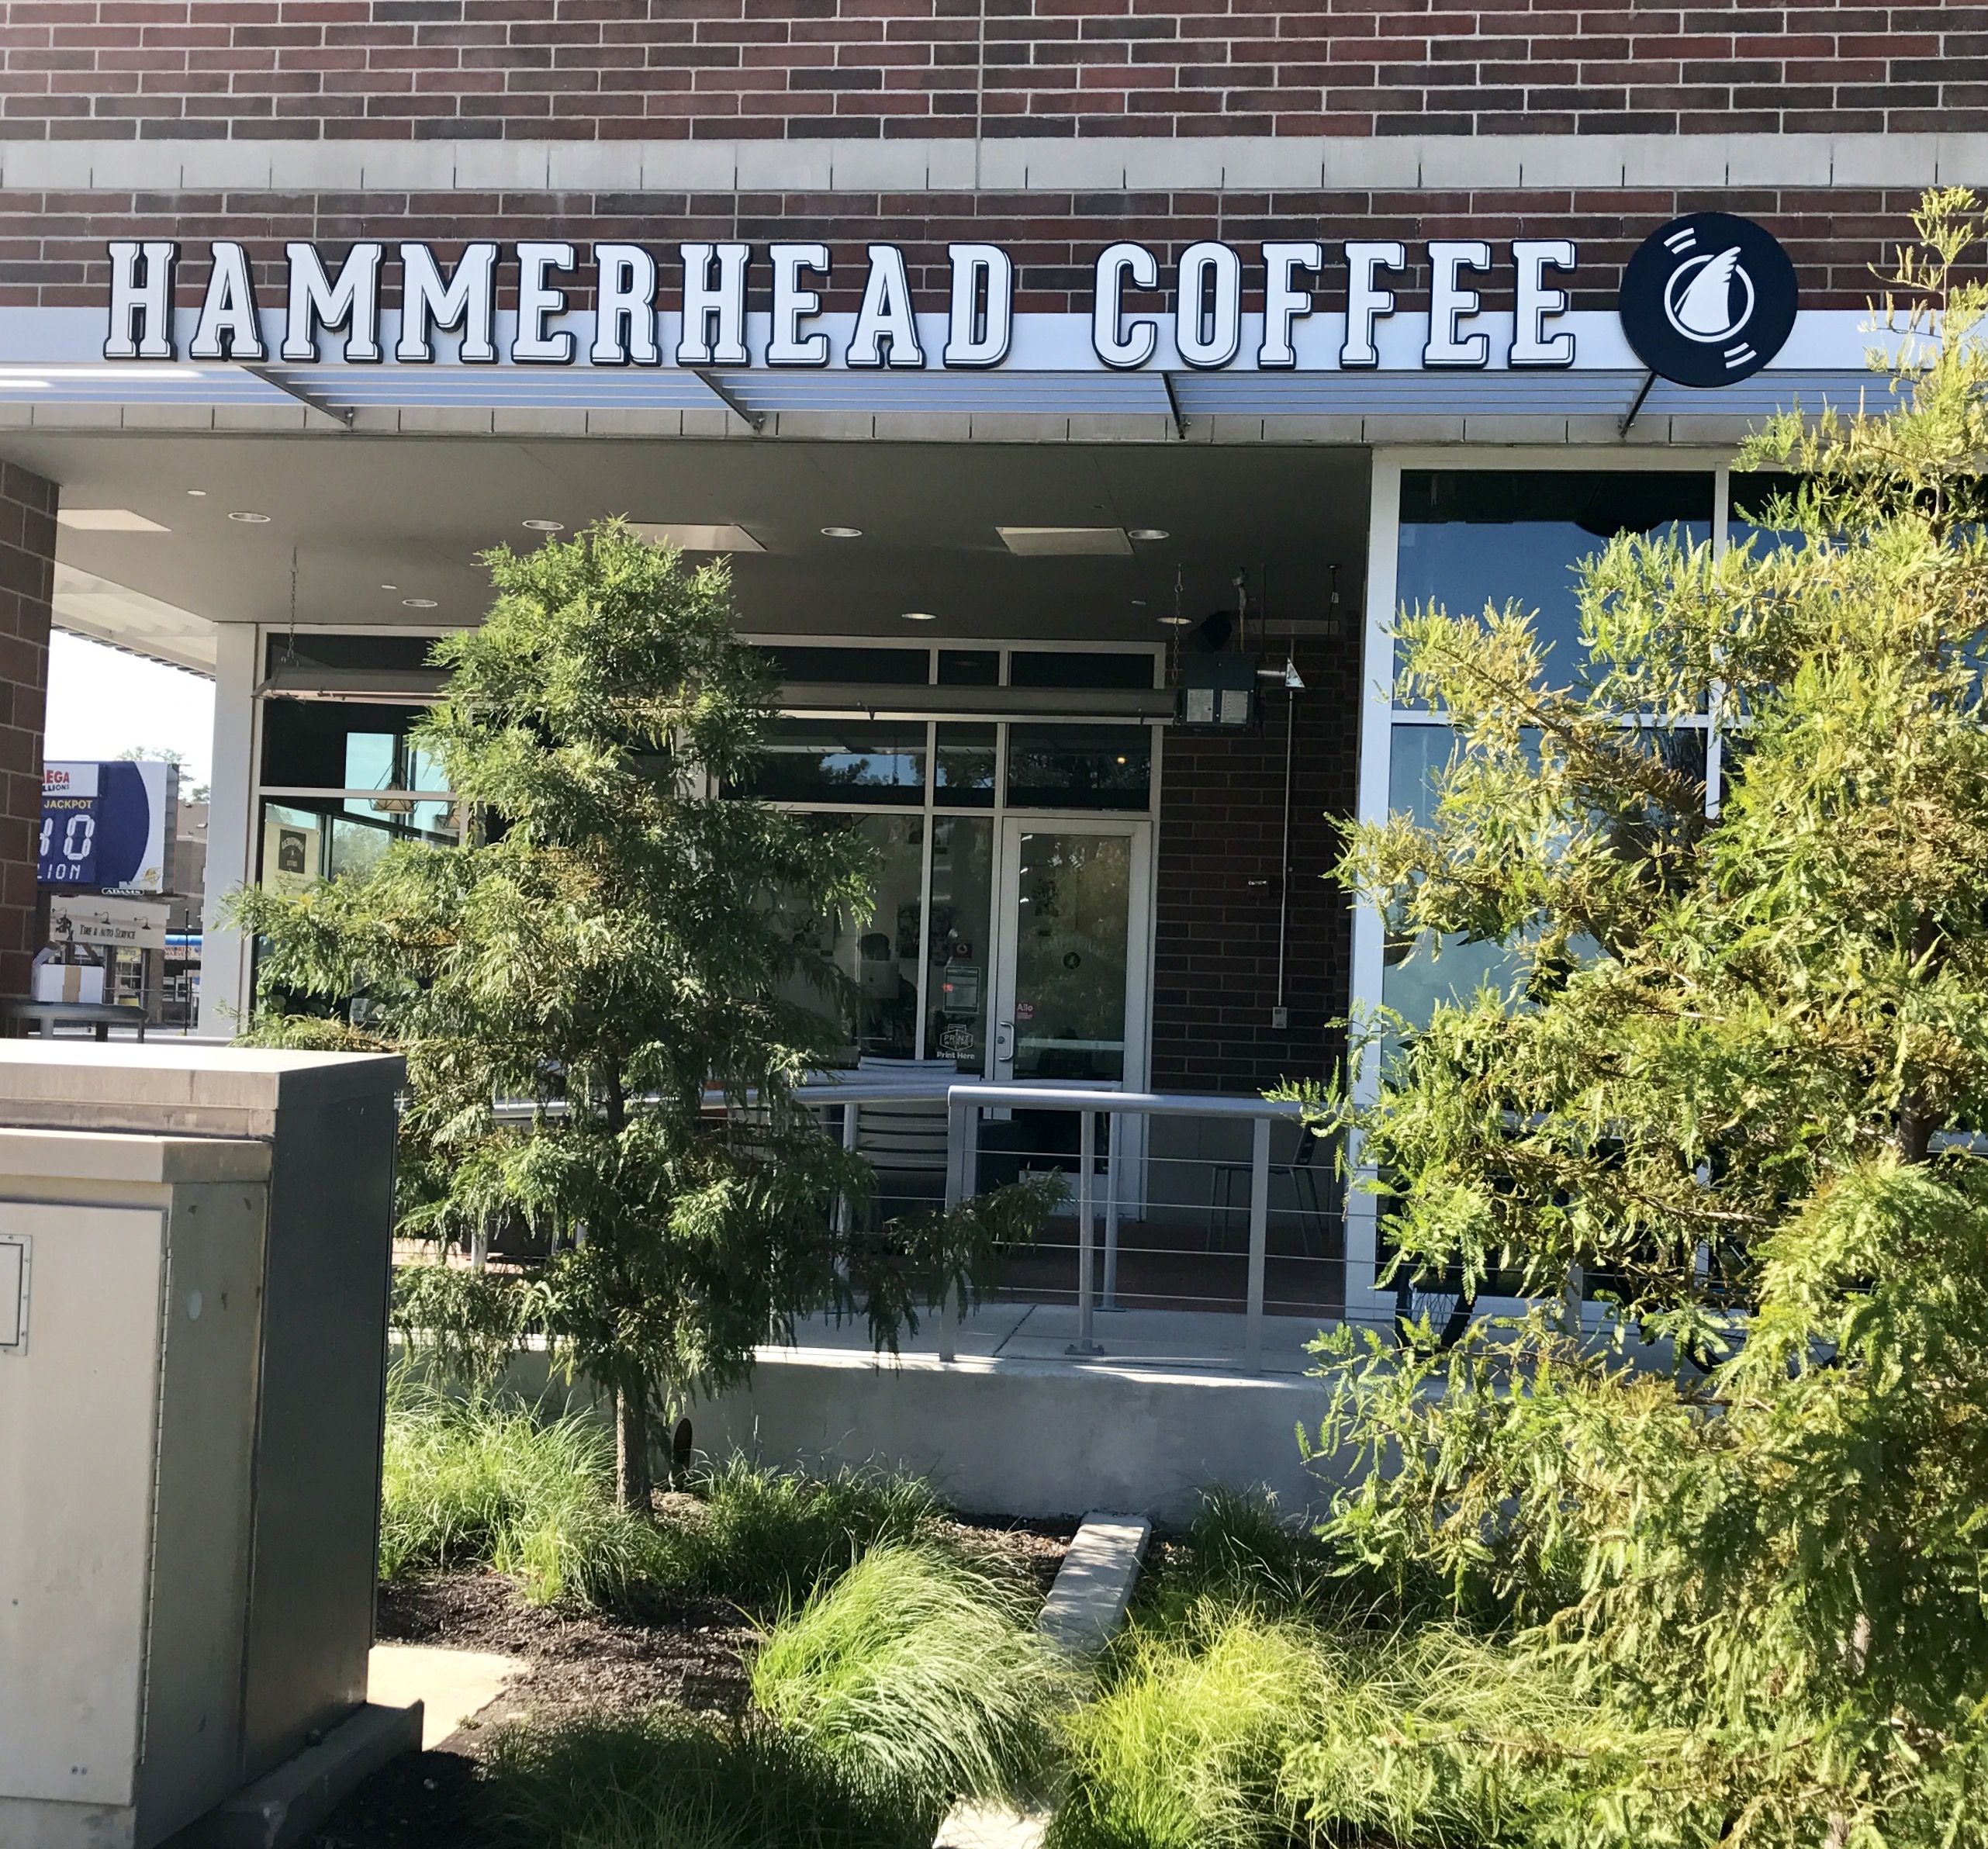 Hammerhead Coffee